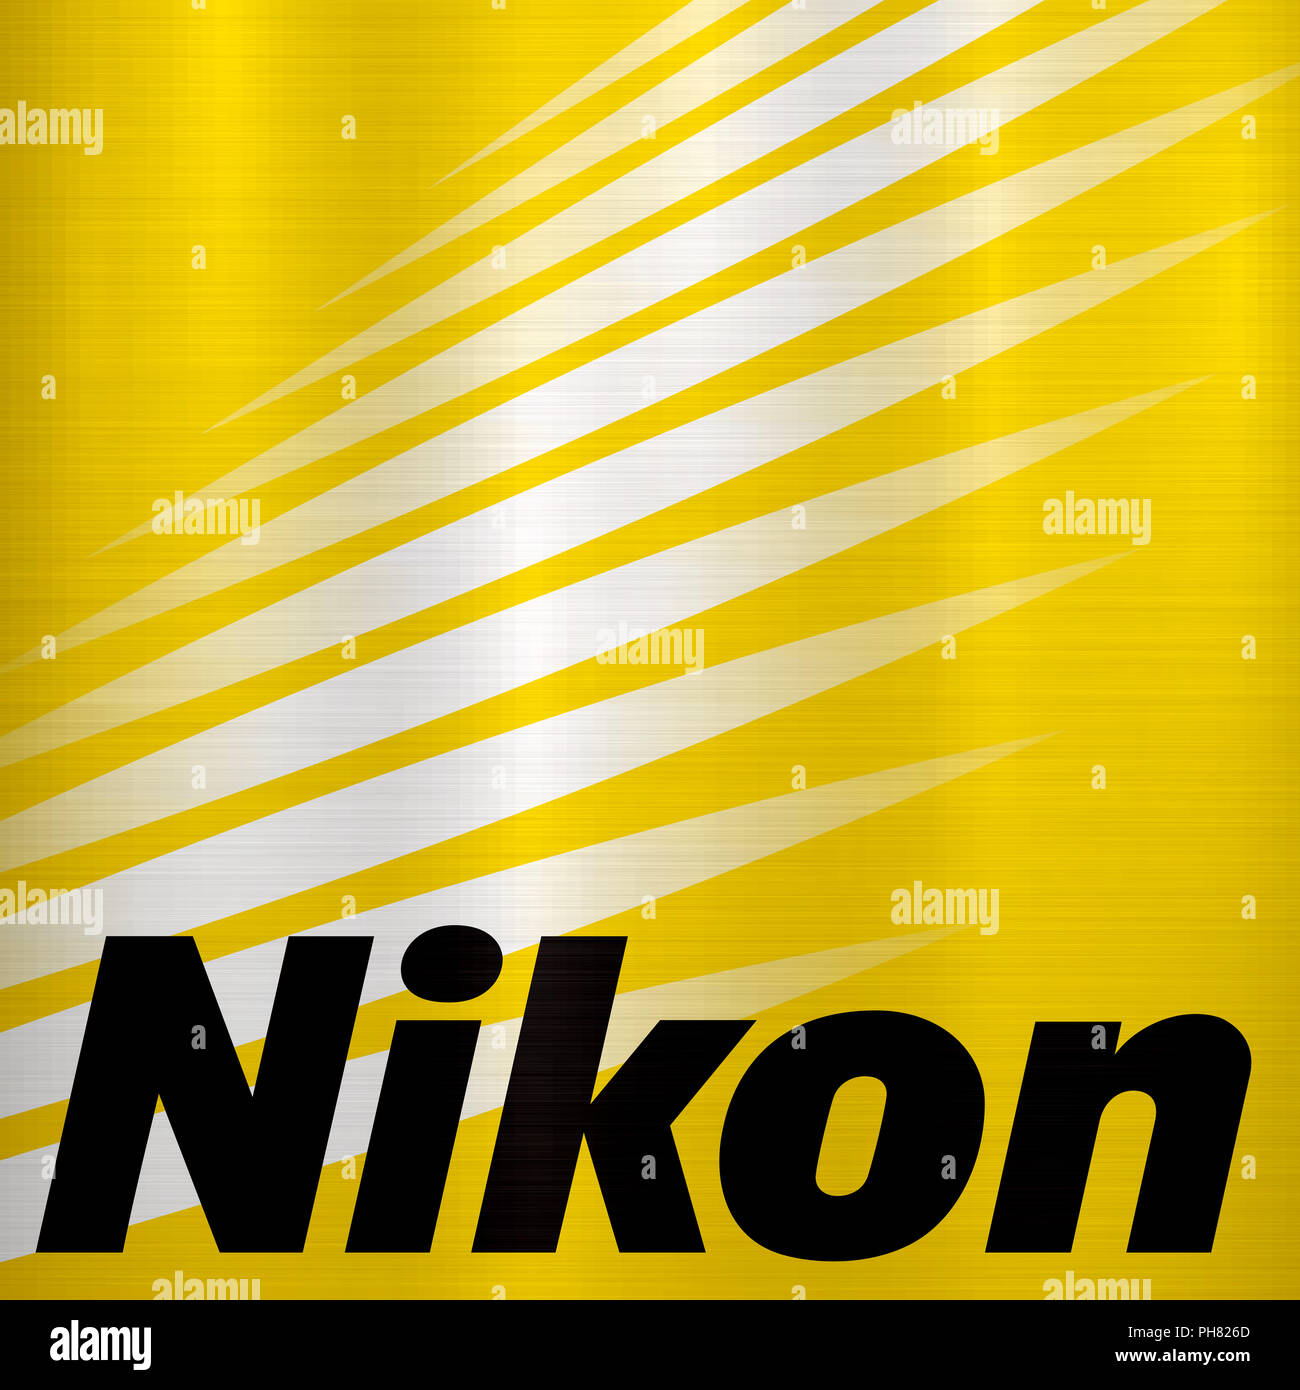 Nikon logo illustration metallic photography technology Stock Photo - Alamy